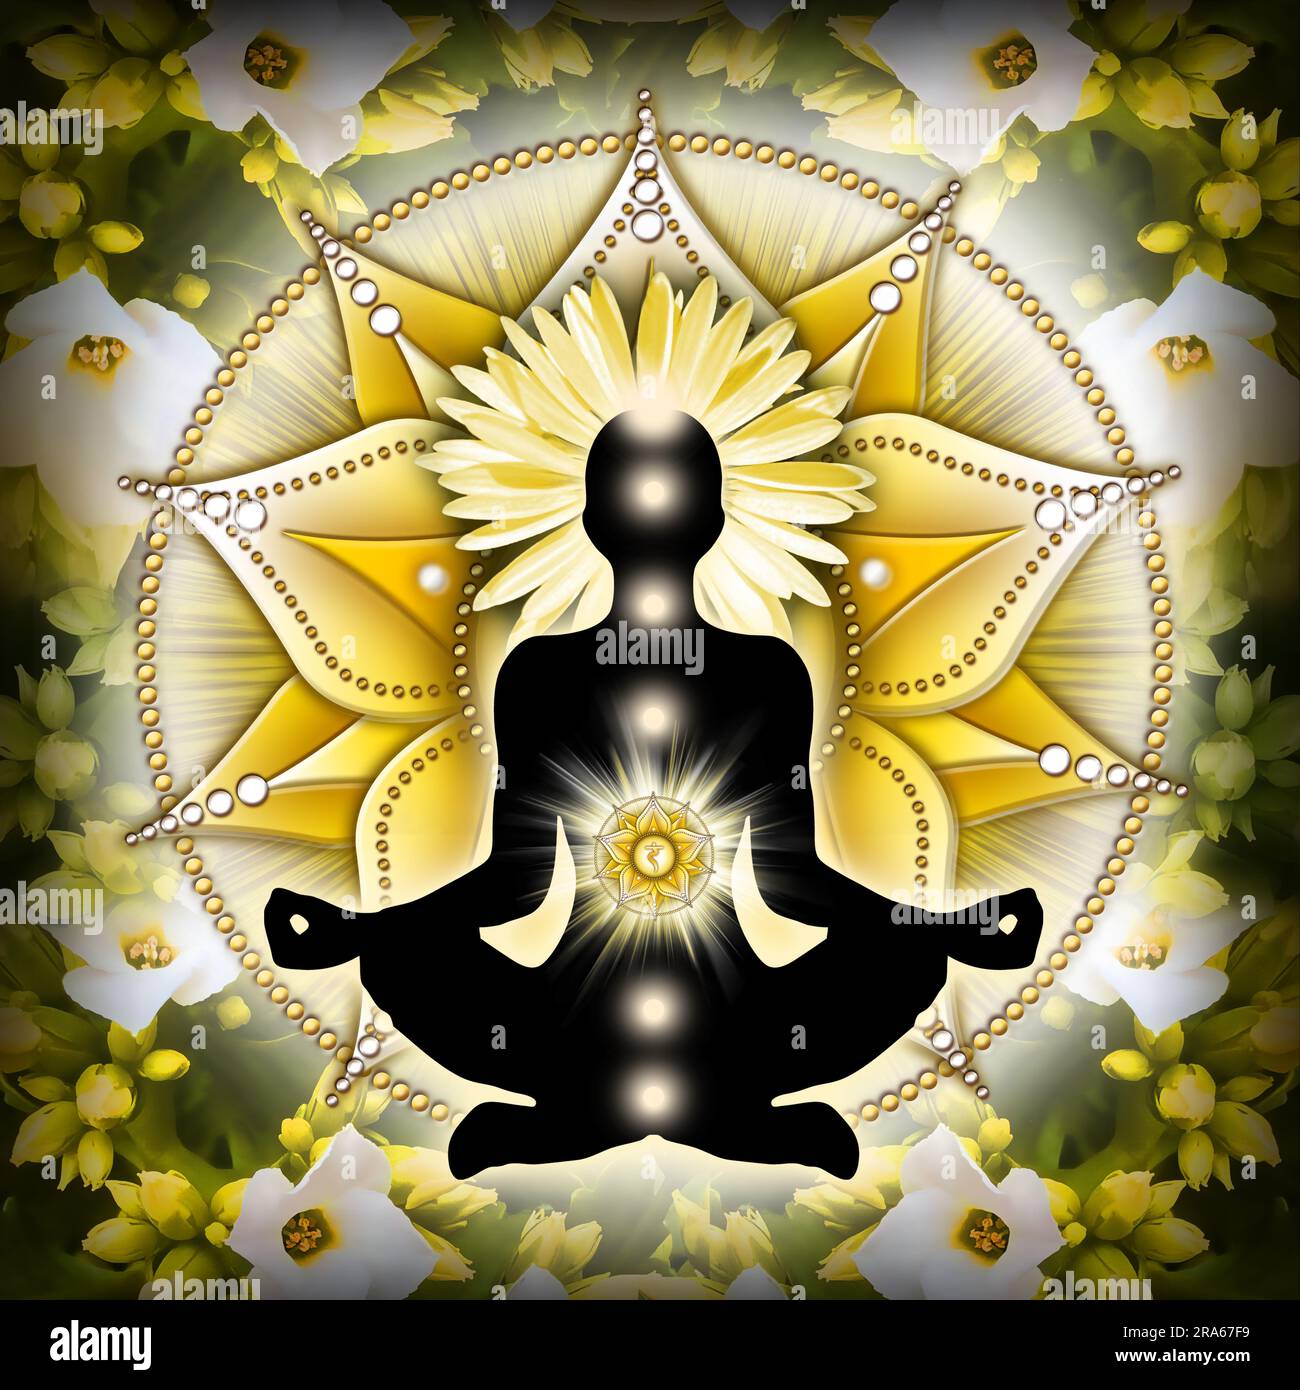 Solar plexus chakra meditation in yoga lotus pose, in front of Manipura chakra symbol and beautiful spring flowers. Stock Photo